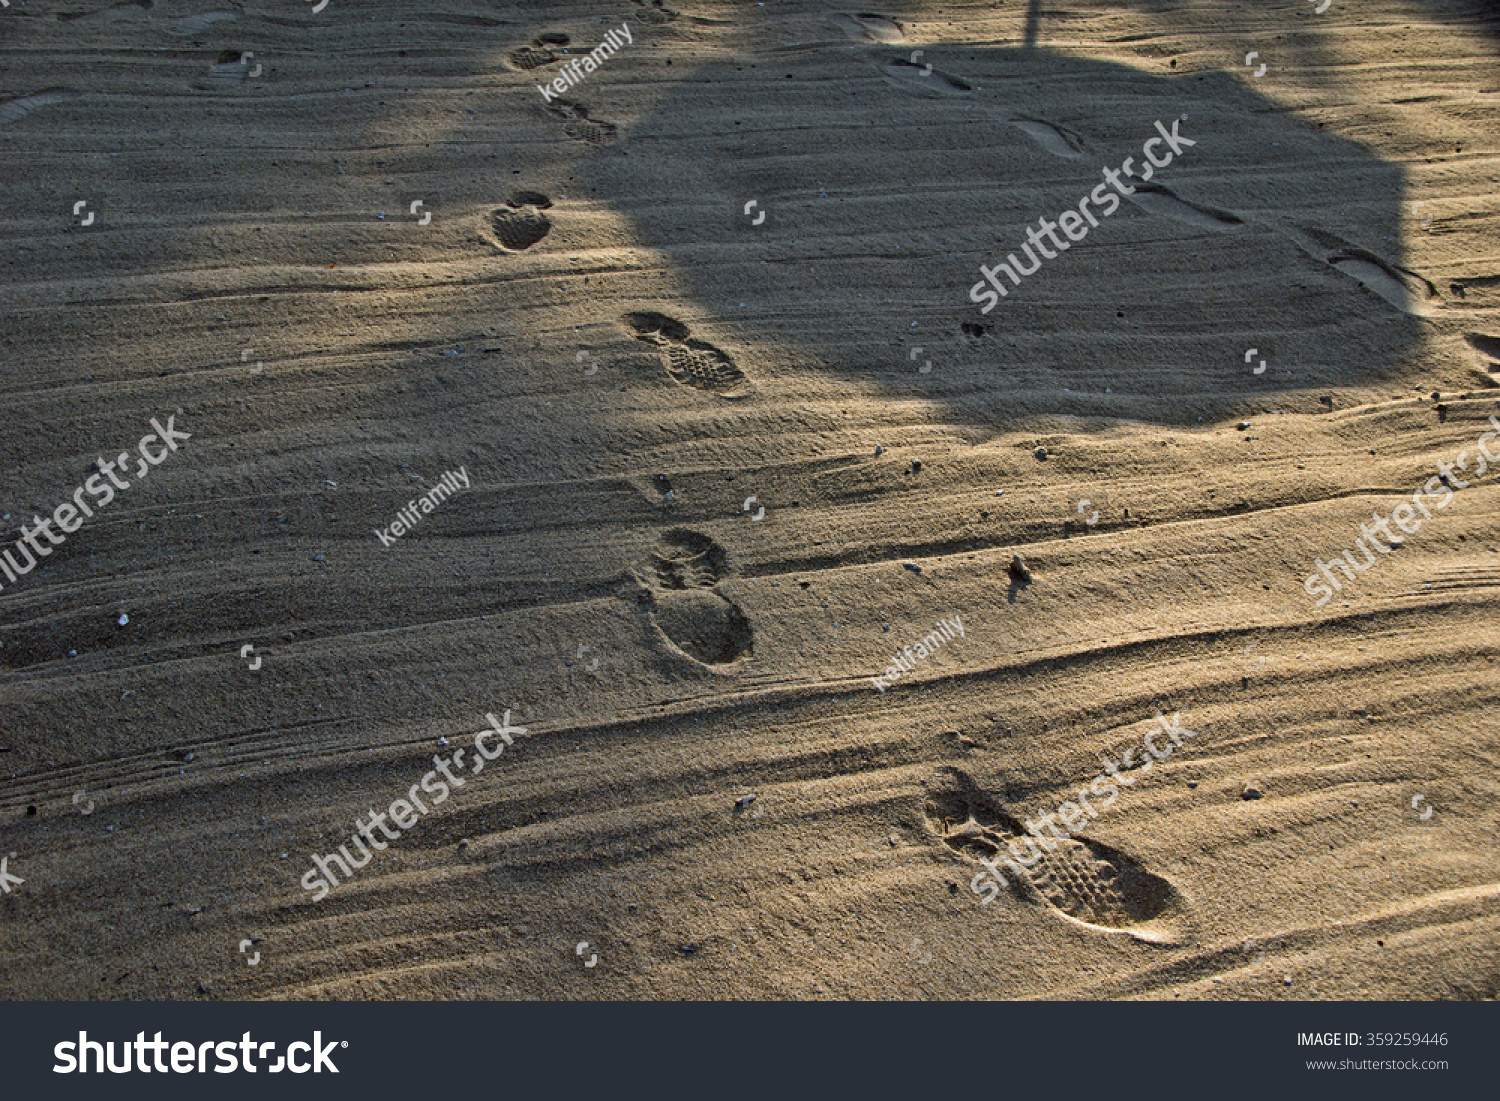 Human Footprints On Beach Sand Stock Photo Shutterstock